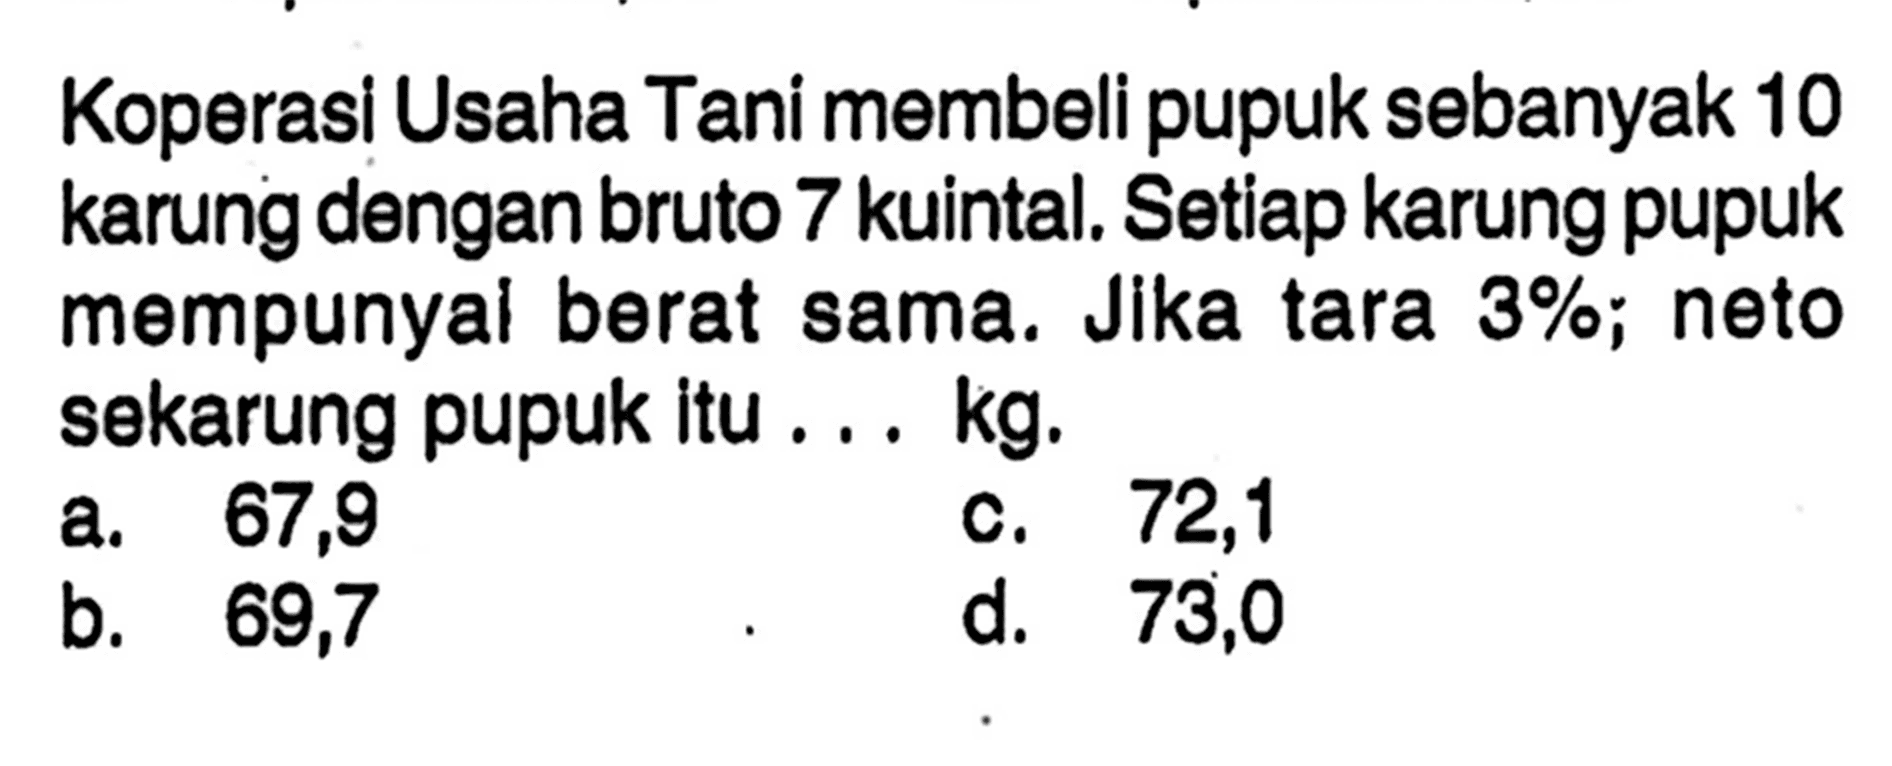 Koperasi Usaha Tani membeli pupuk sebanyak 10 karung dengan bruto 7 kuintal. Setiap karung pupuk mempunyal berat sama. Jika tara 3%; neto sekarung pupuk itu ... kg.